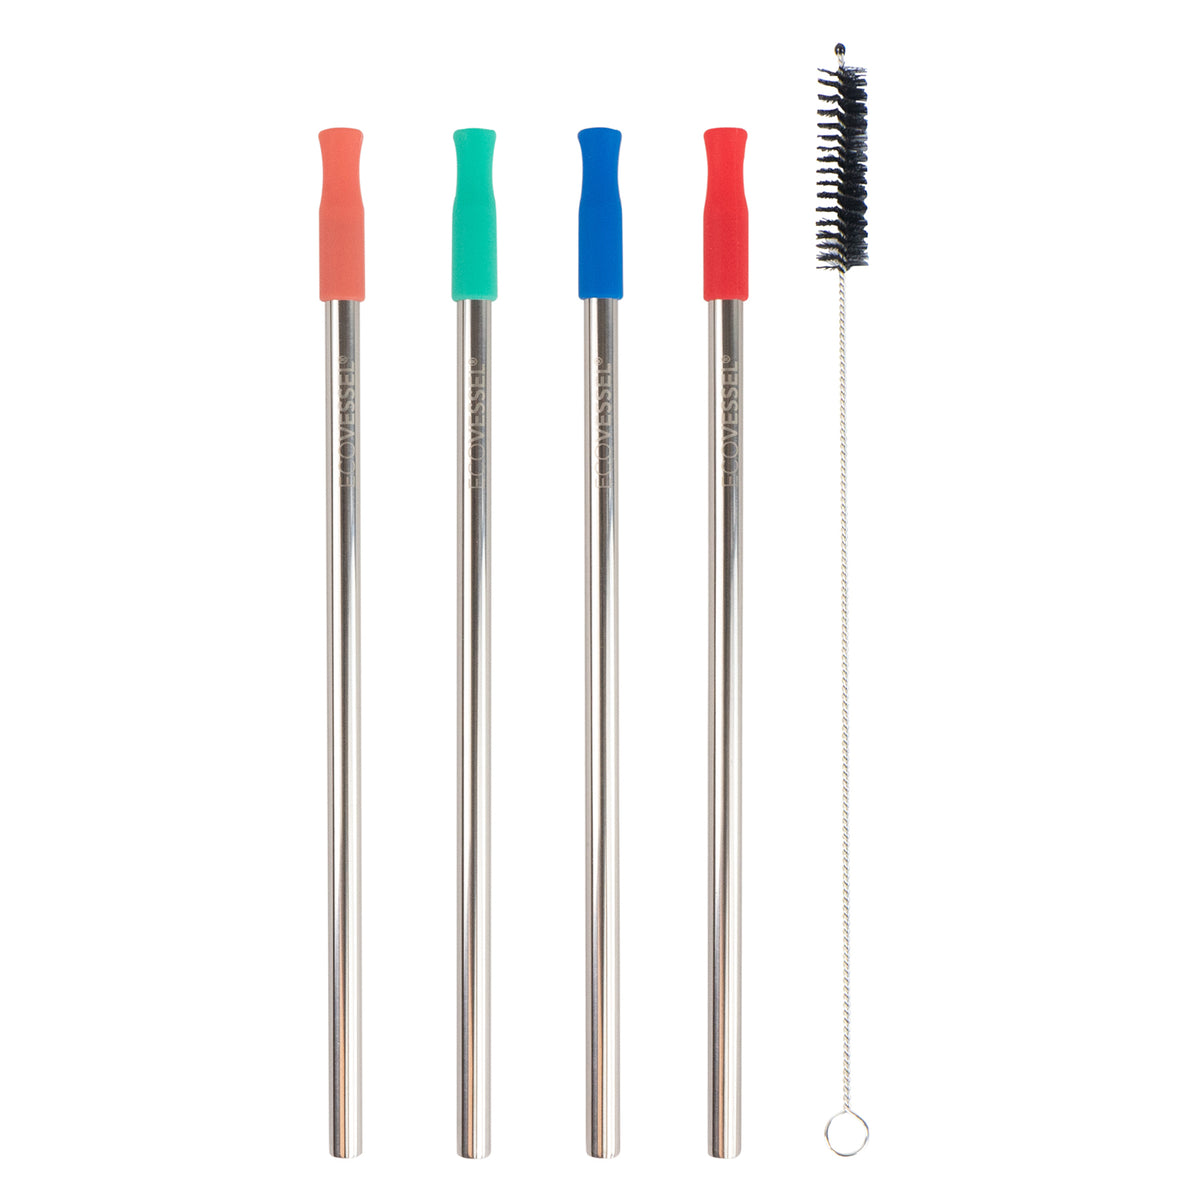 Stainless Steel Straws Set (x4)